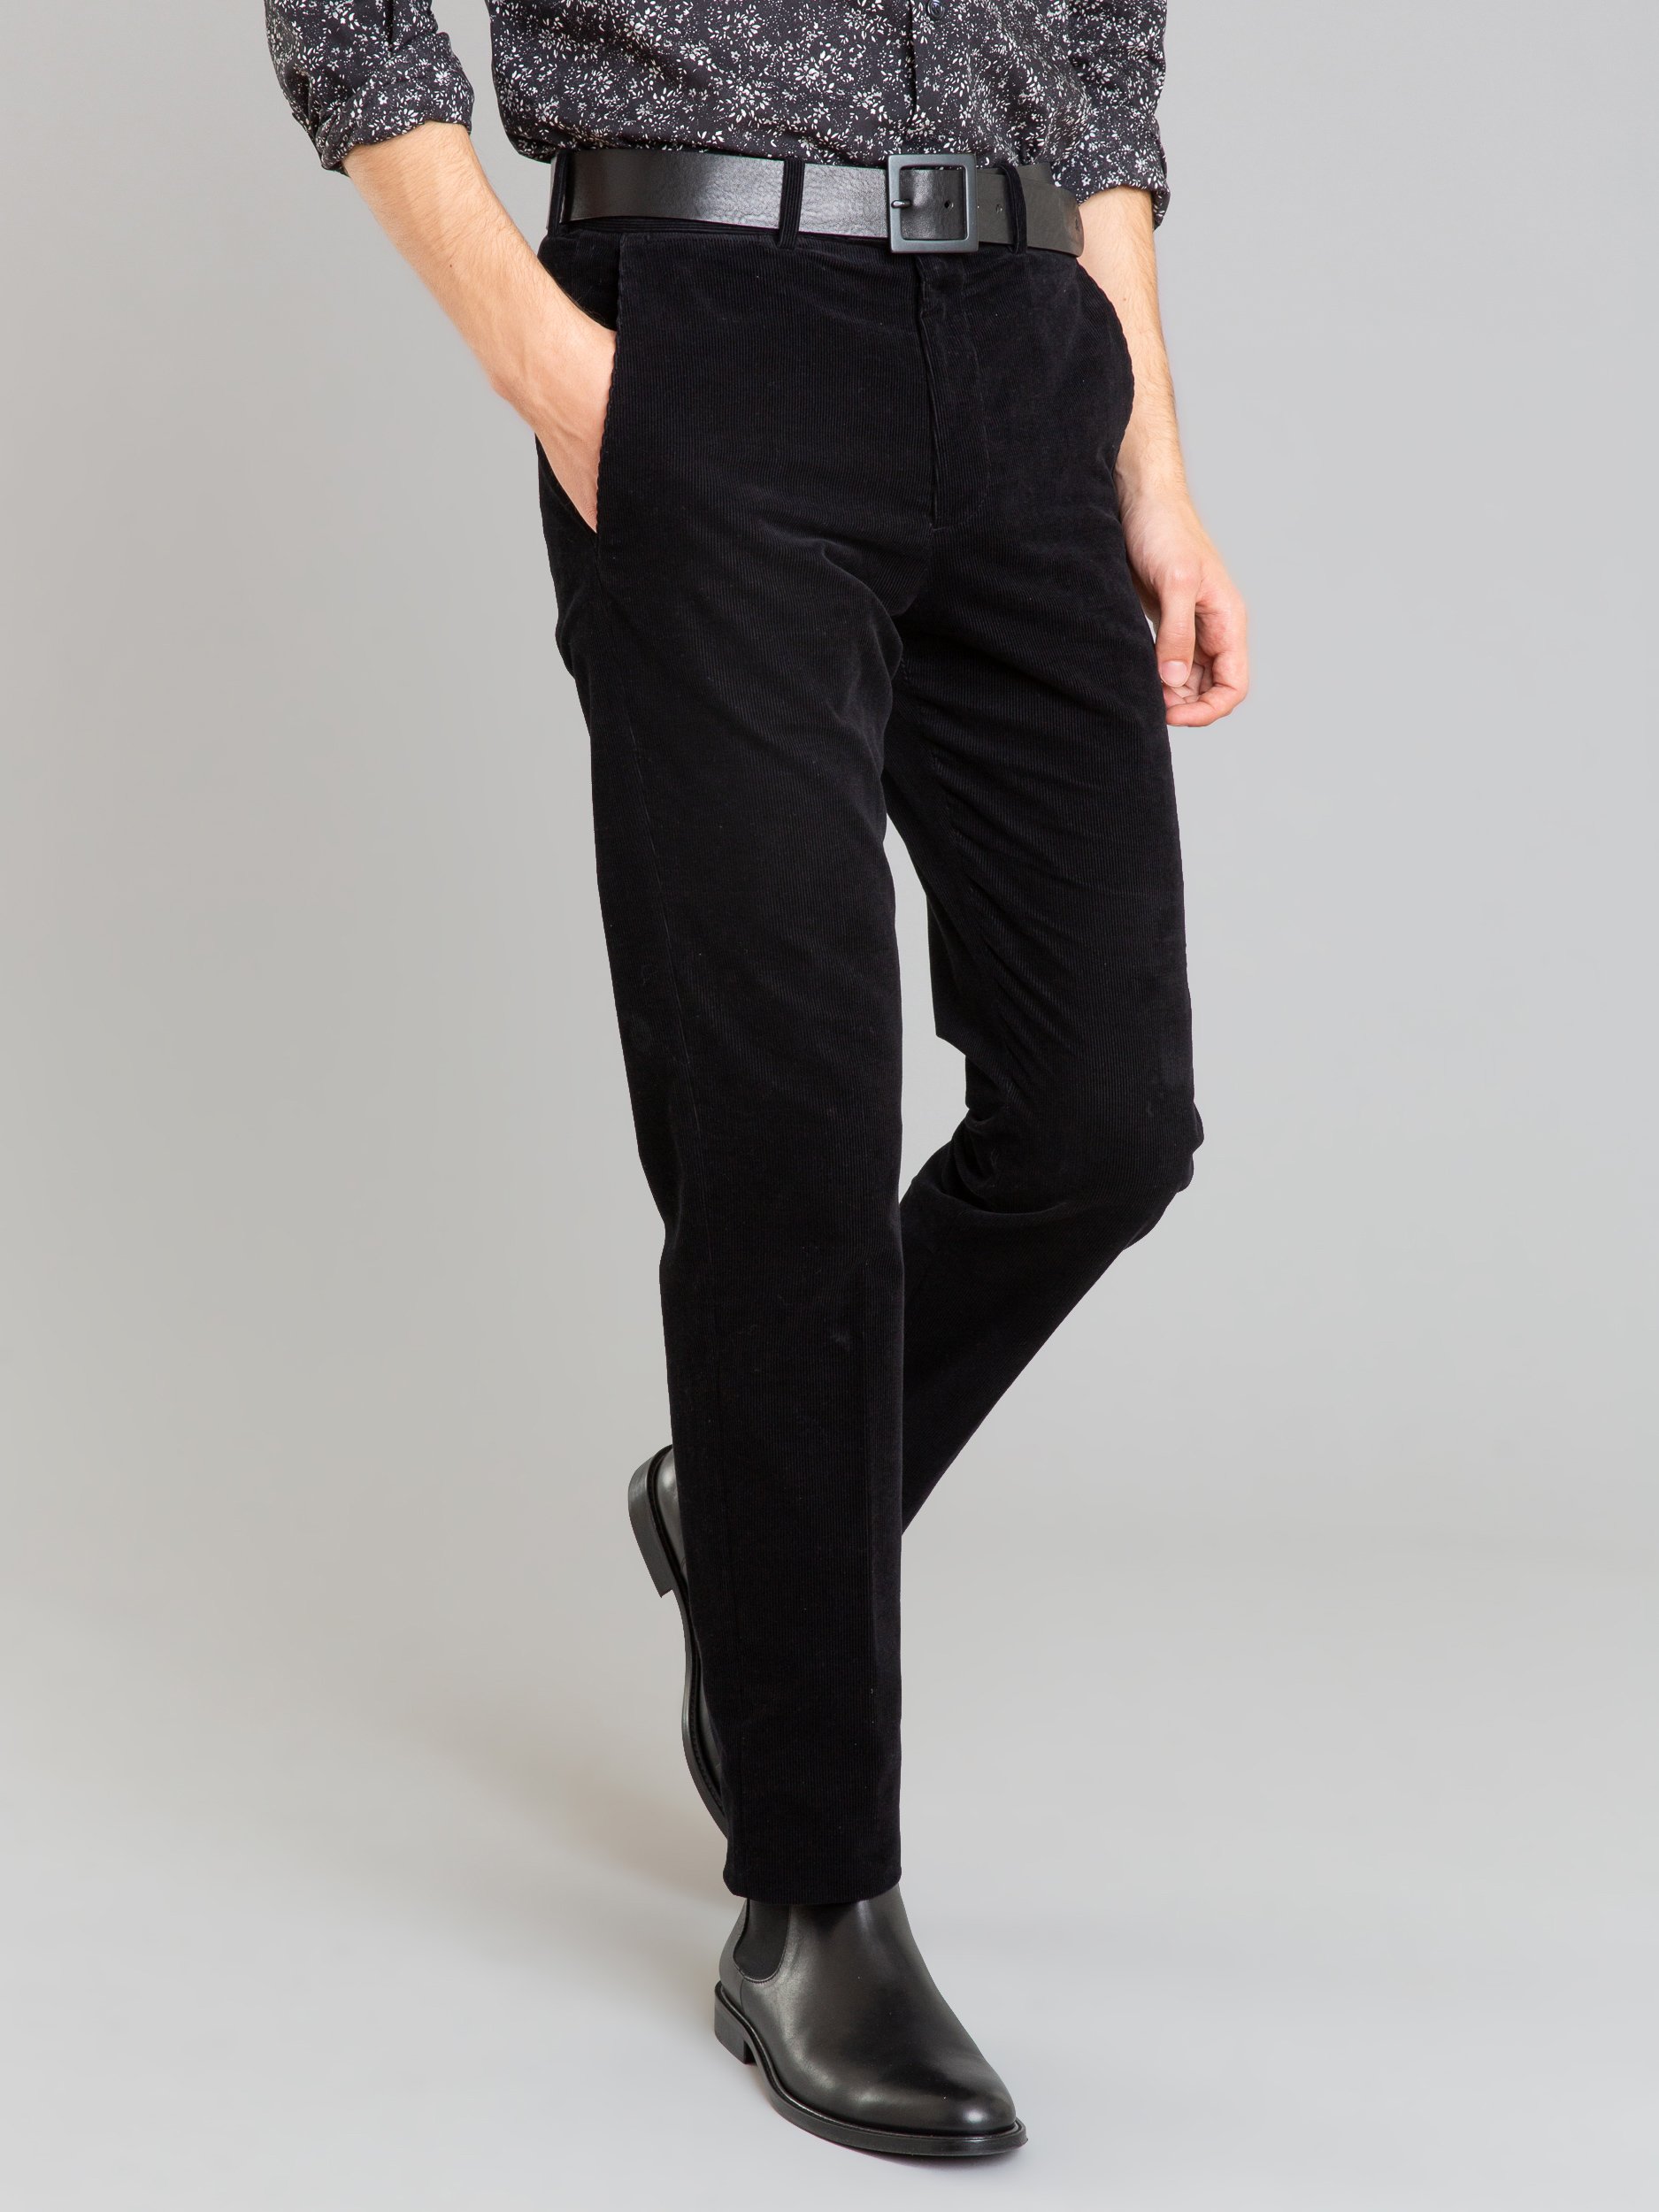 Top more than 76 black cord pants - in.eteachers